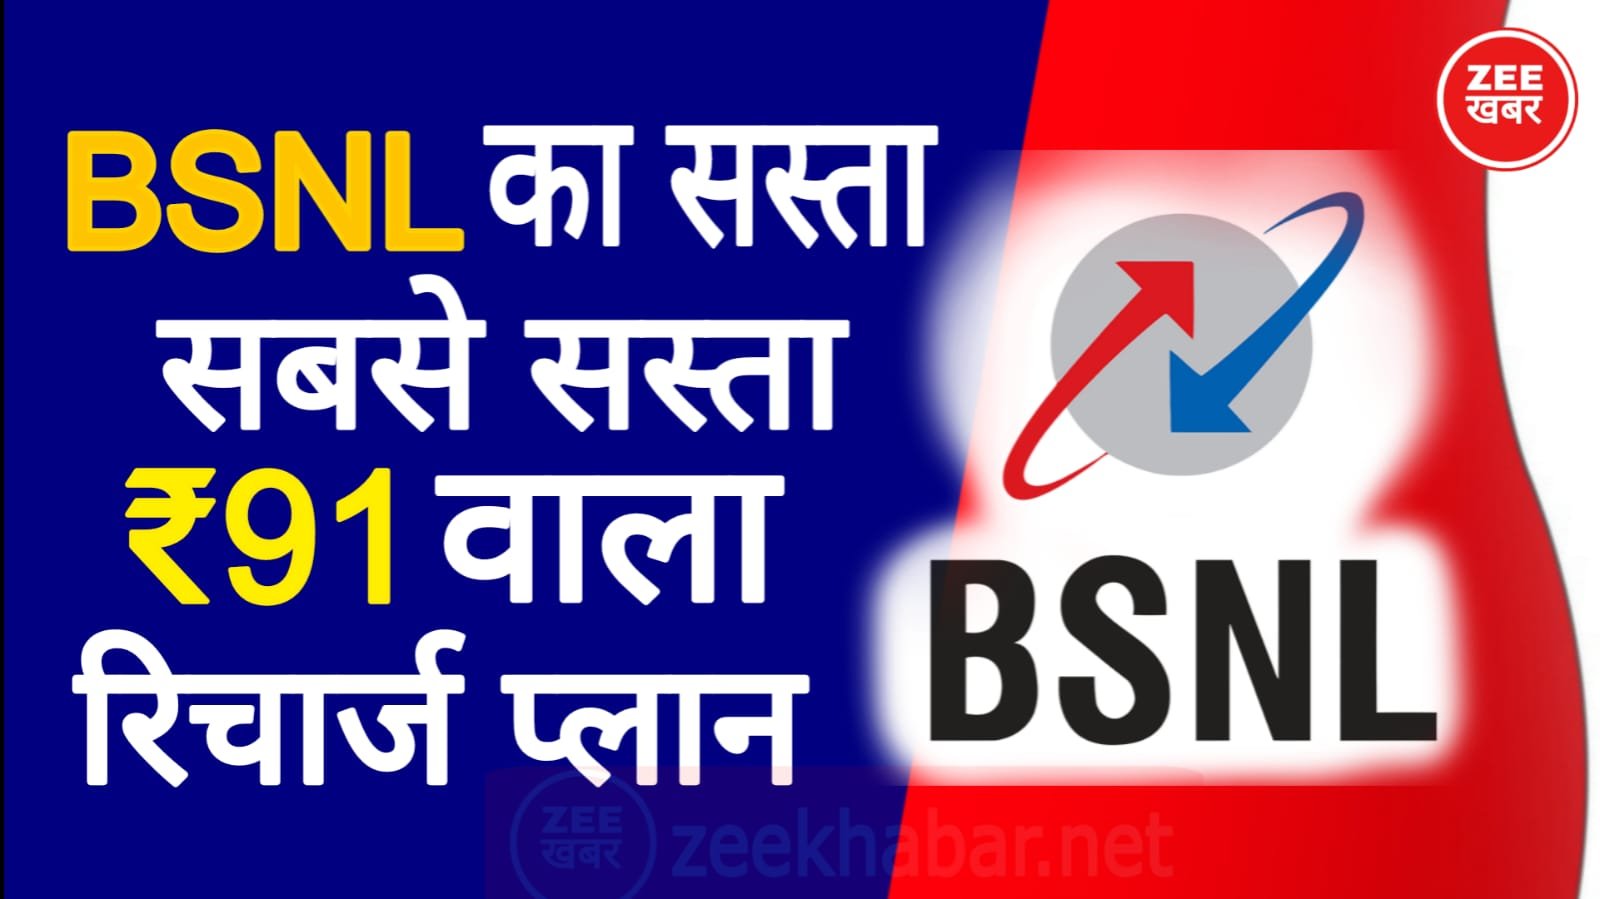 BSNL Recharge Plan 91 Rupees